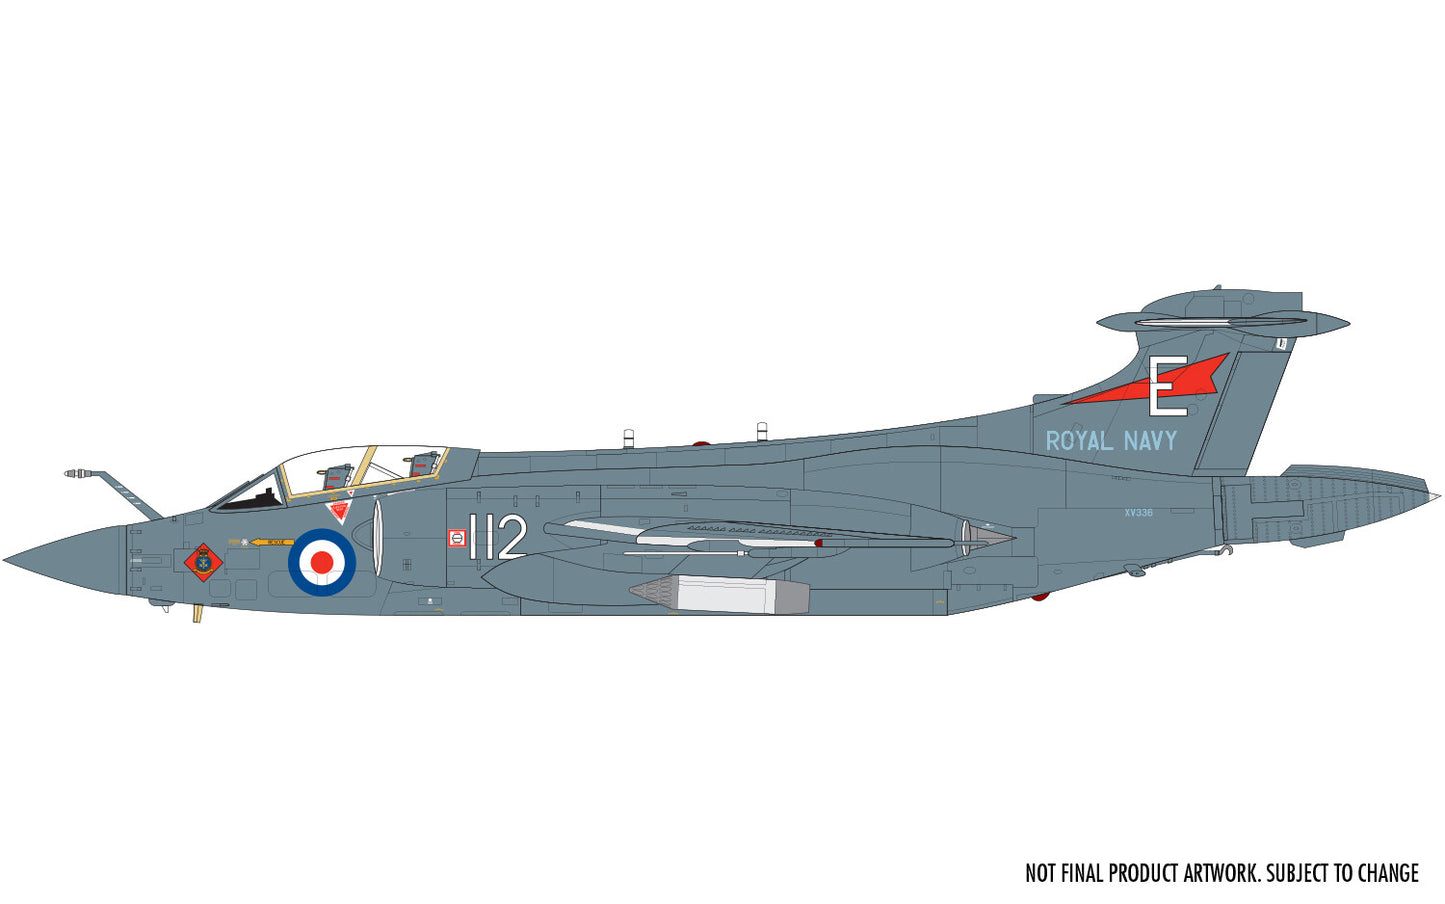 Airfix 1/72nd scale Blackburn Buccaneer S.2 RN